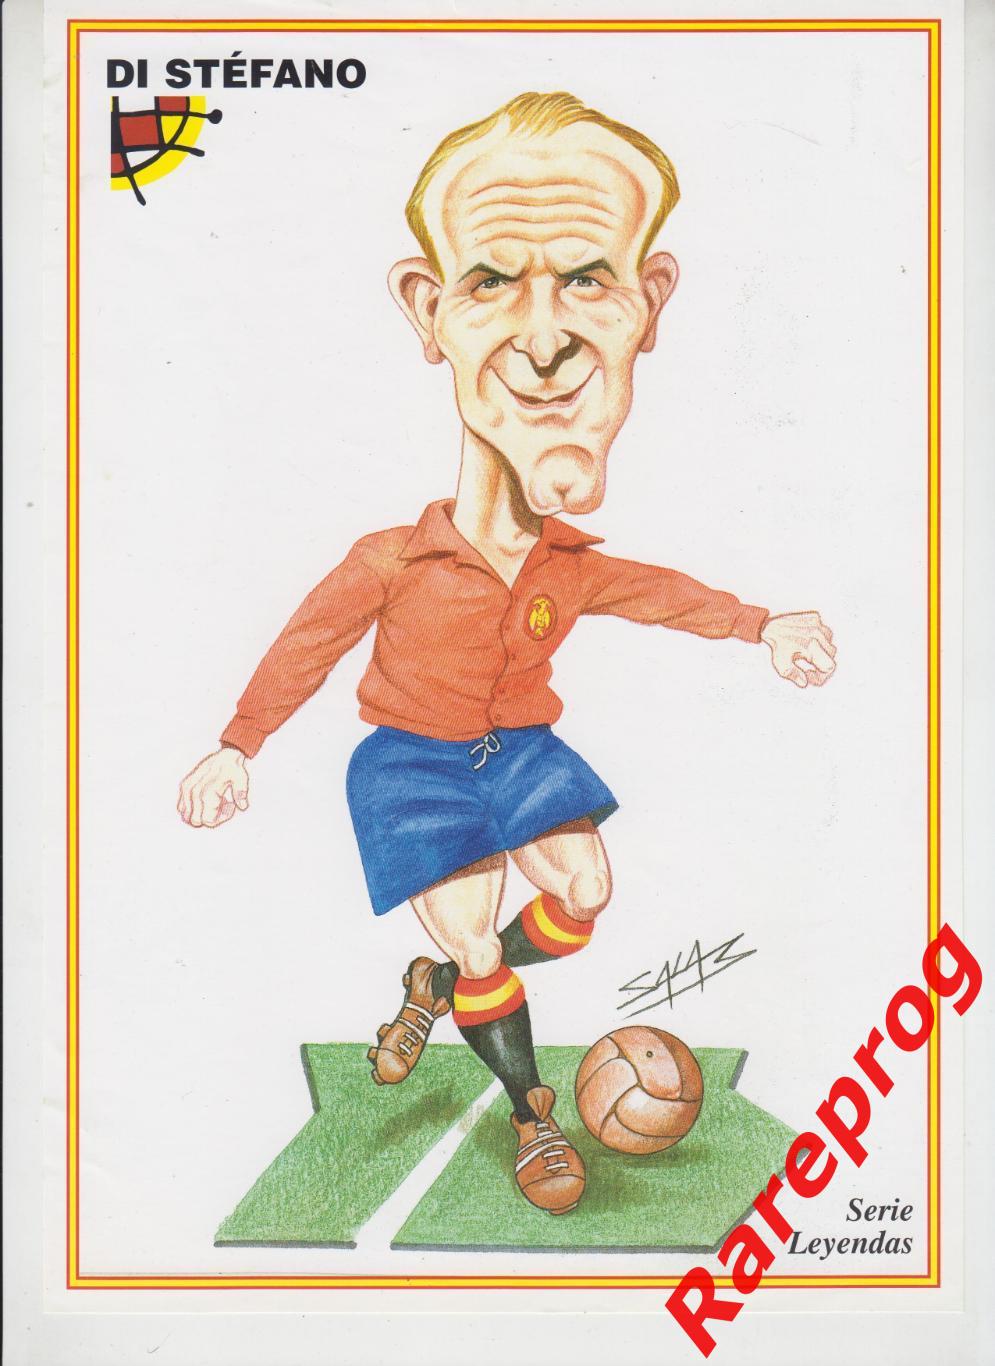 журнал Футбол RFEF Испания № 96 апрель 2007 - постер Di Stefano 1